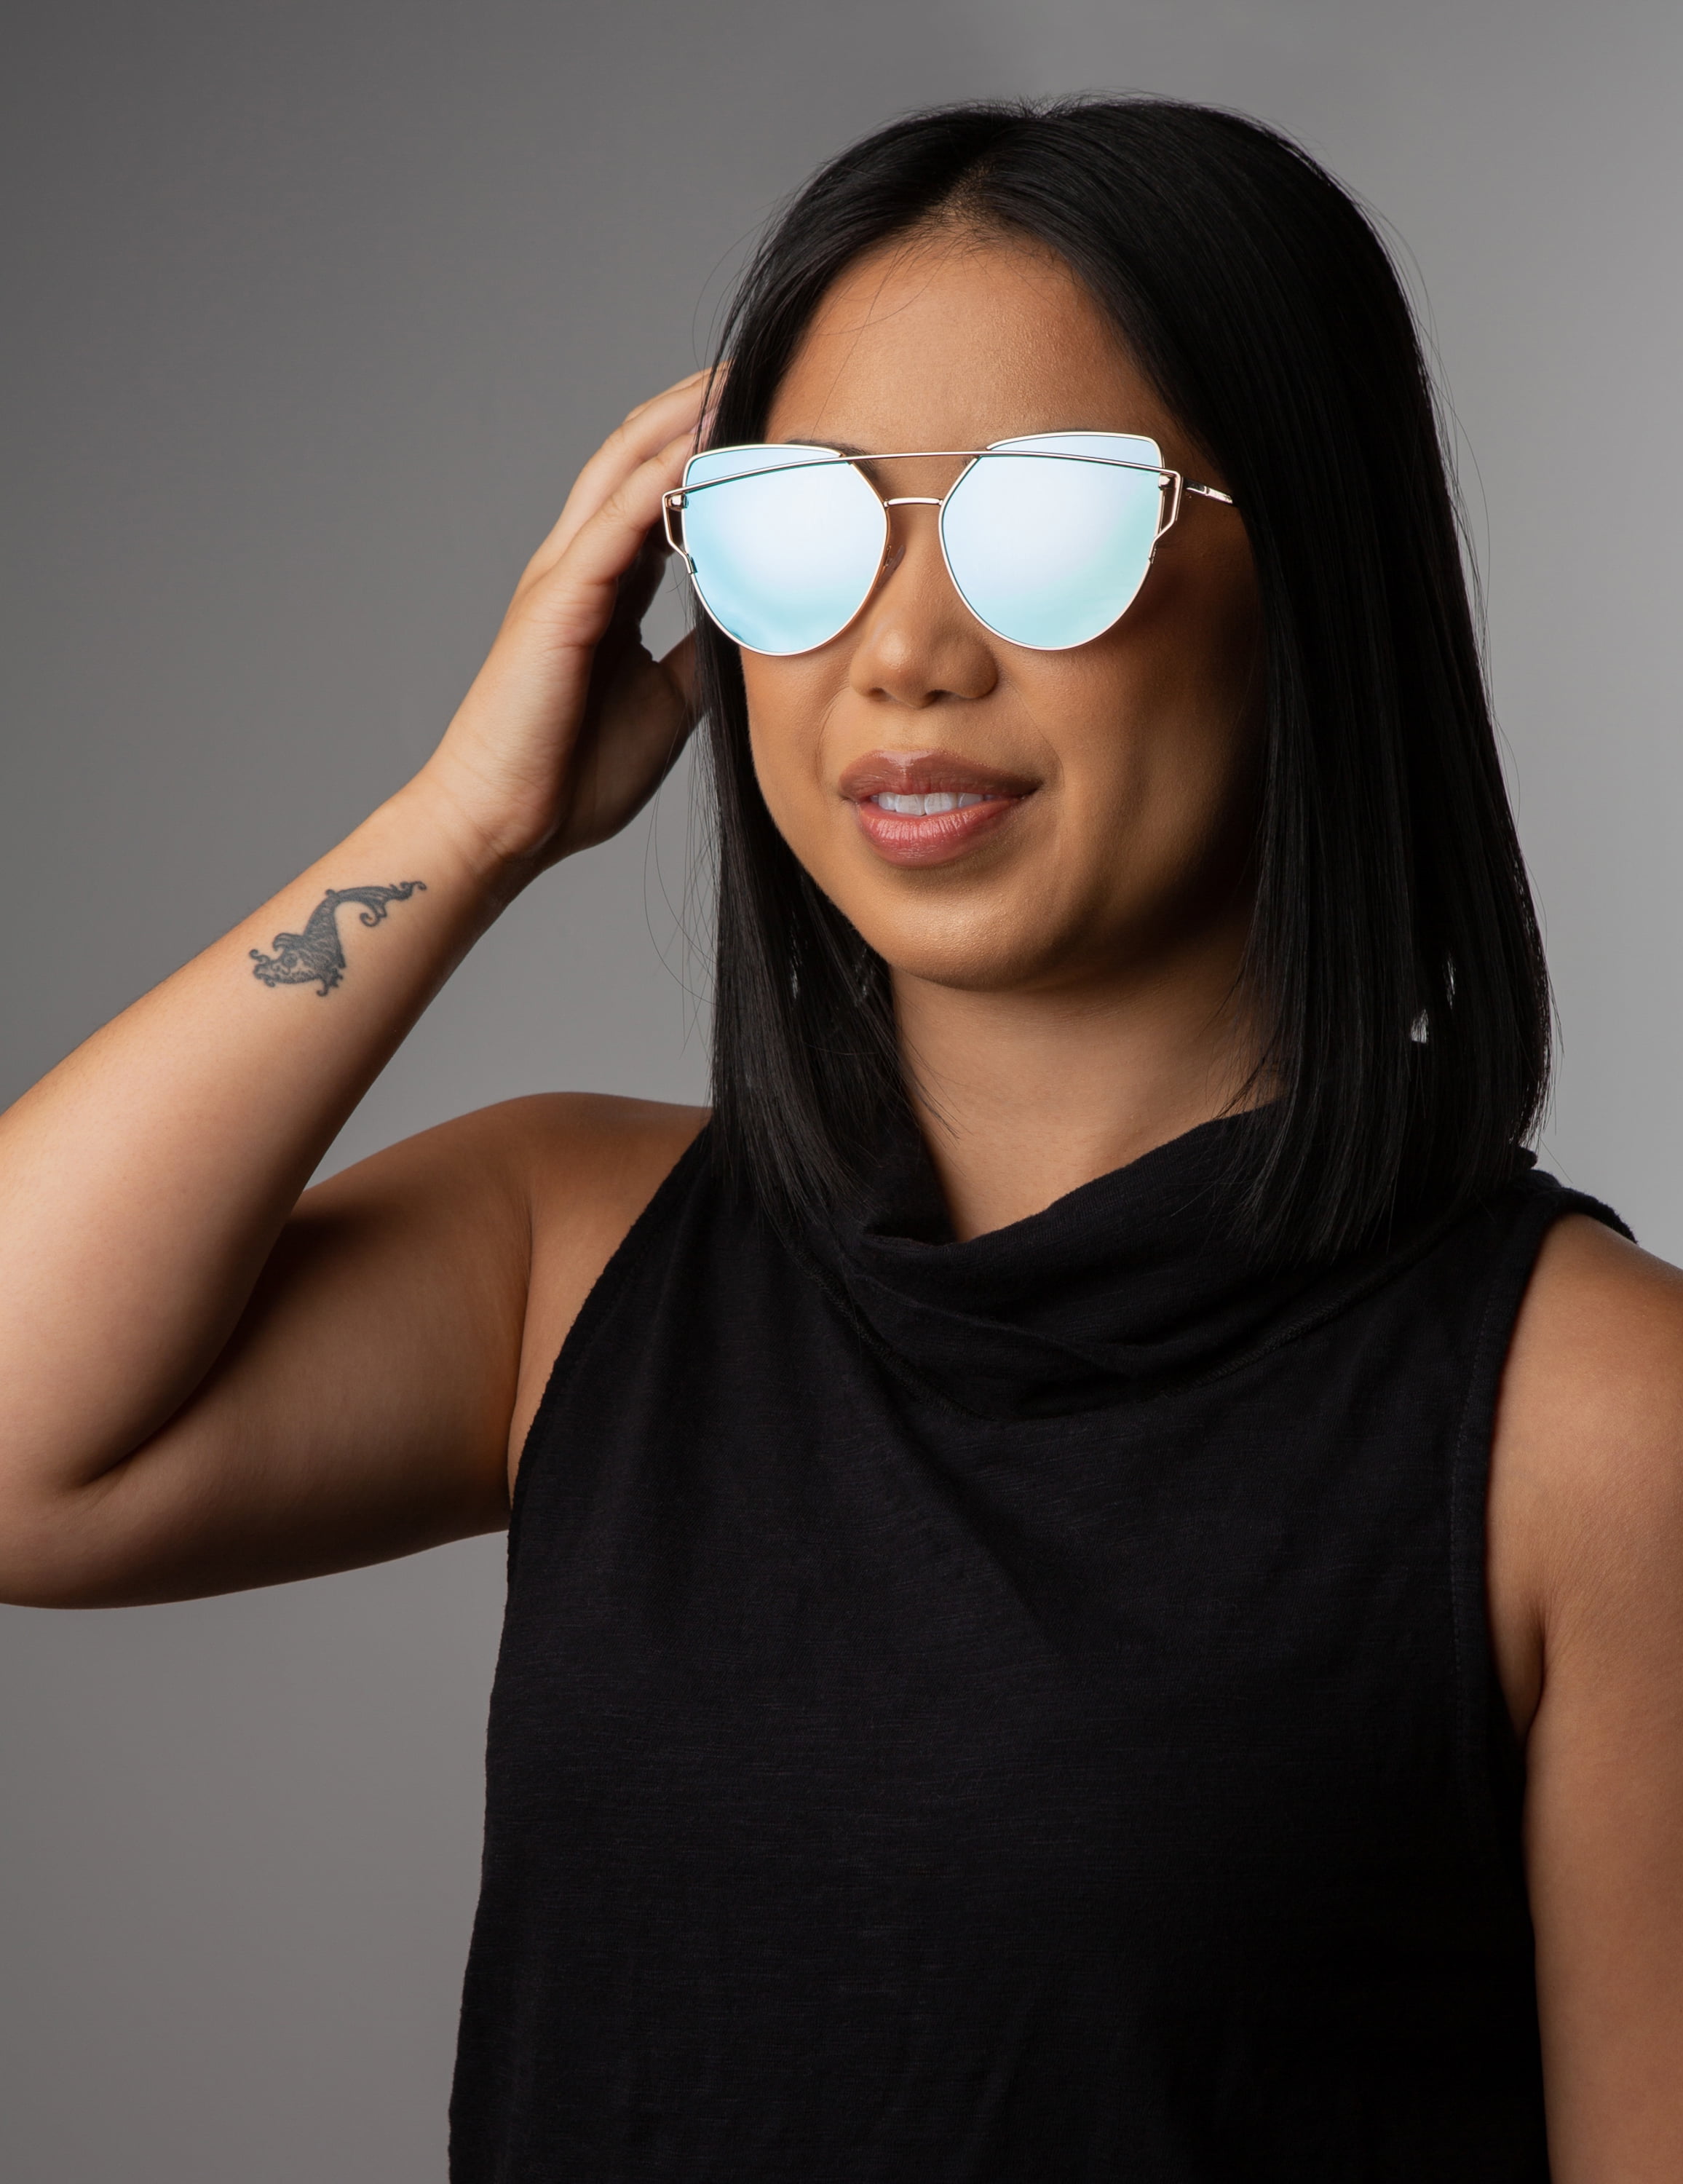 Hershey | Women's Flat Lens Metal Frame Cat Eye Sunglasses Silver - Icy Blue